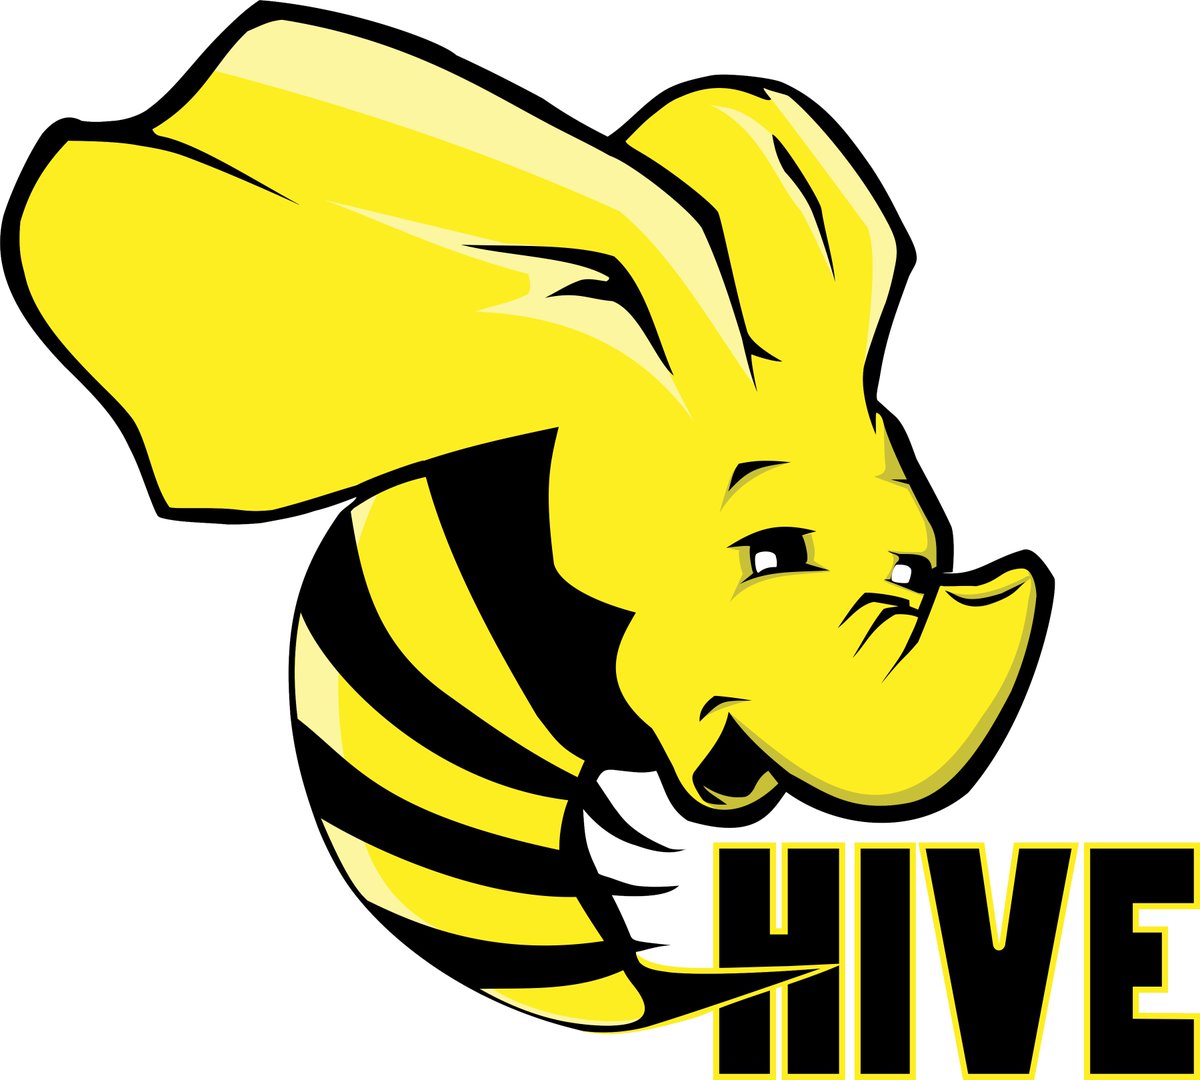 [NEWS] Apache Software Foundation Announces Apache® Hive 4.0 news.apache.org/foundation/ent… #opensource